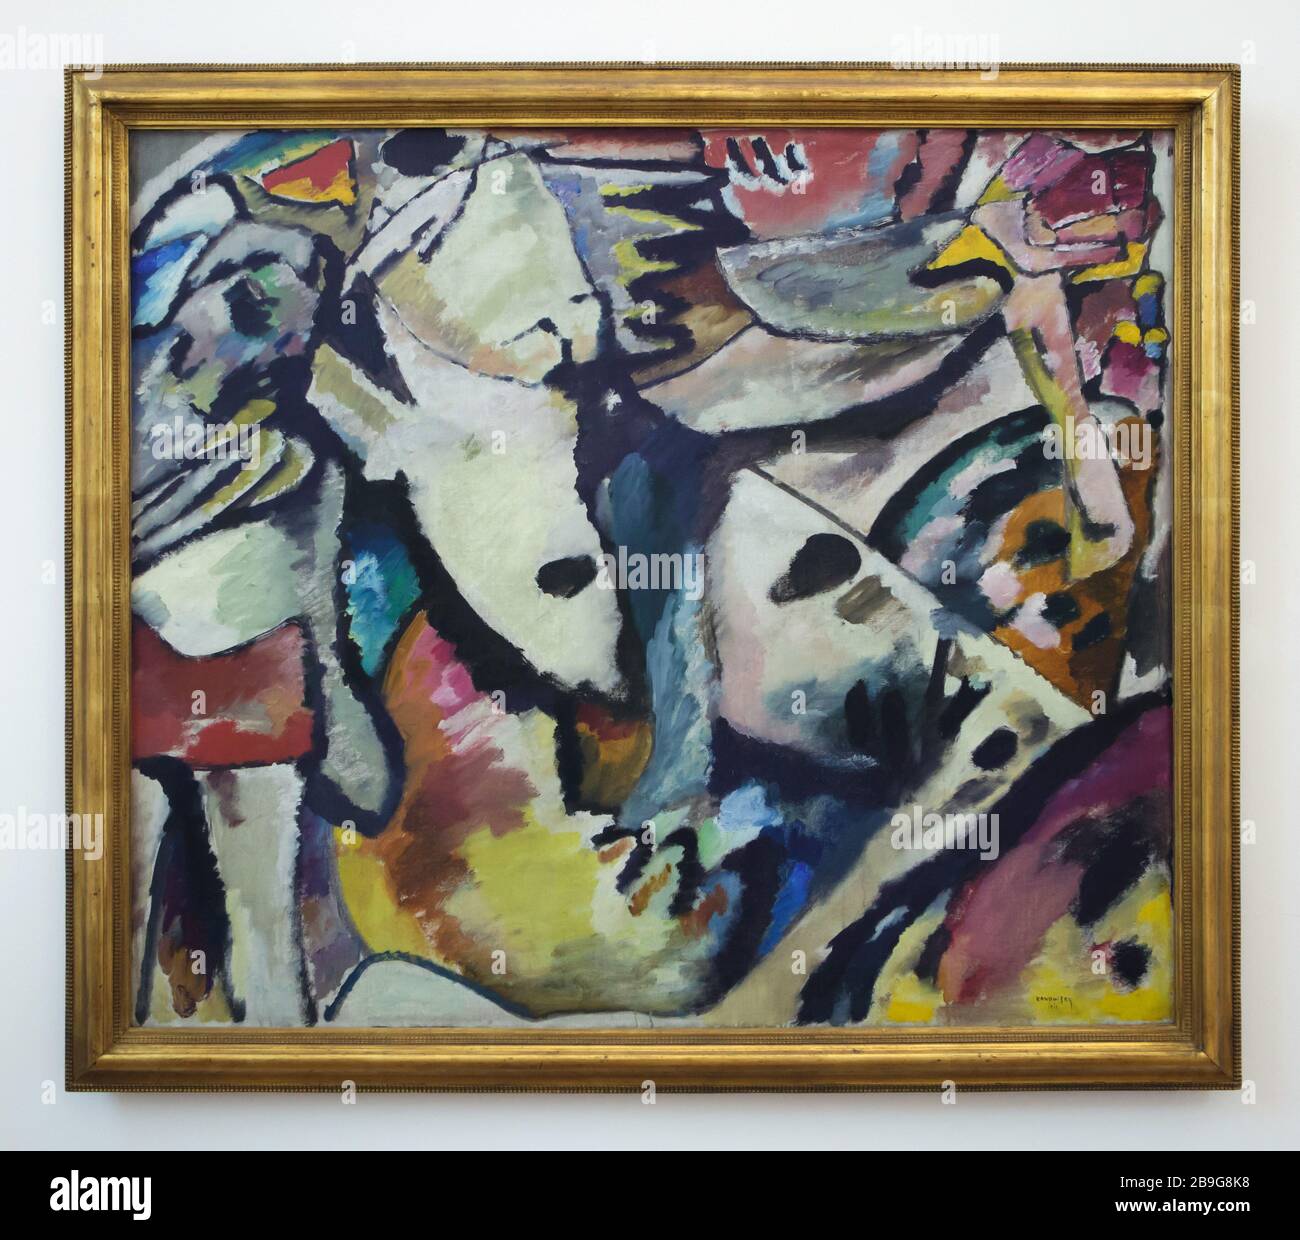 Pintura 'Improvisation 13' del pintor modernista ruso Wassily Kandinsky (1910) en la Staatliche Kunsthalle Karlsruhe (Galería de Arte Estatal) en Karlsruhe, Baden-Württemberg, Alemania. Foto de stock